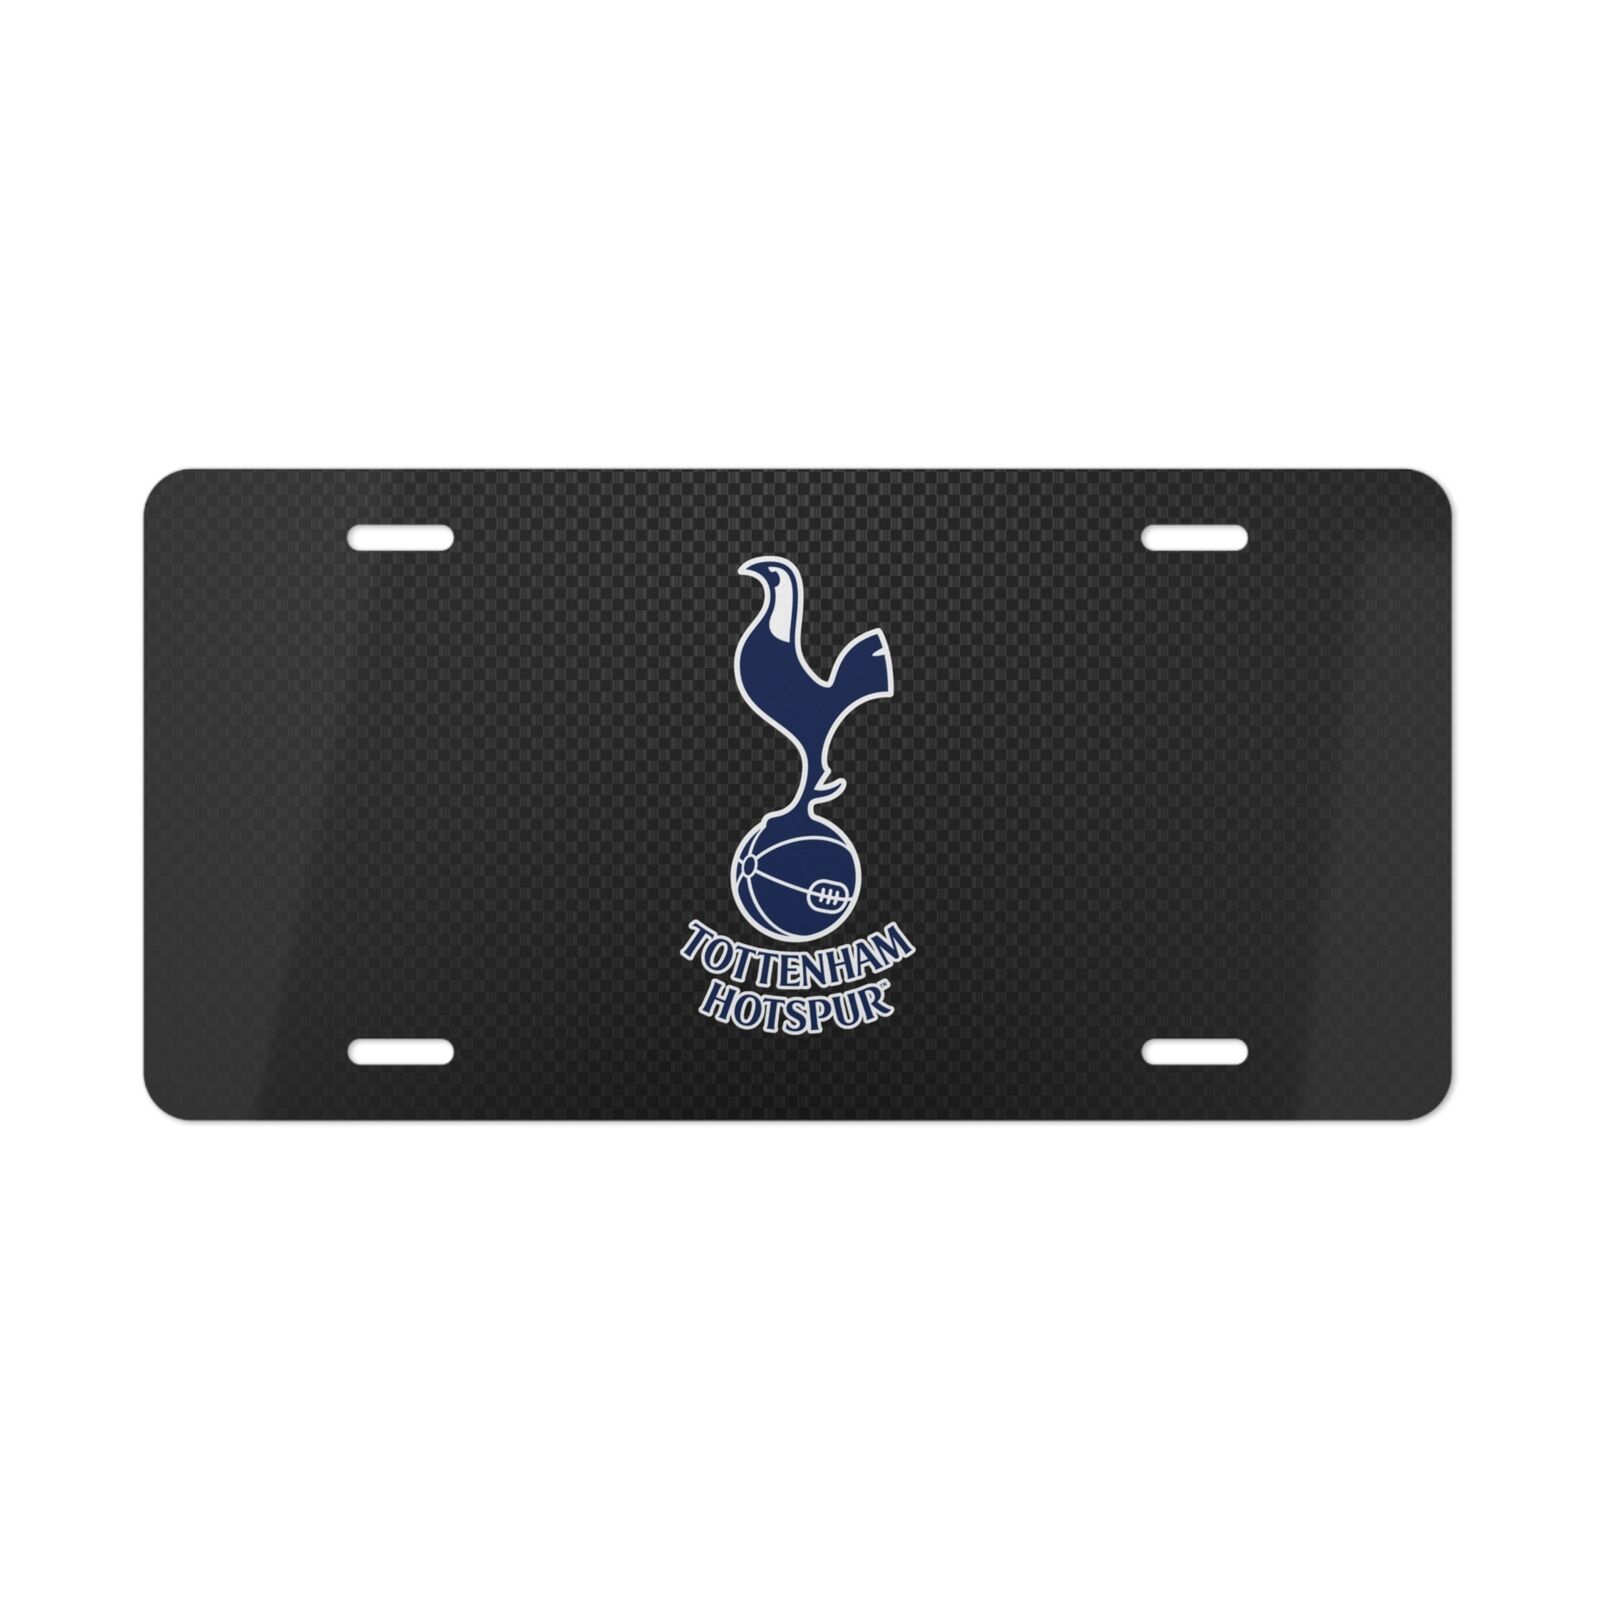 Tottenham Hotspur Football Club, License Plate New Car Tag Metal Aluminum - USA